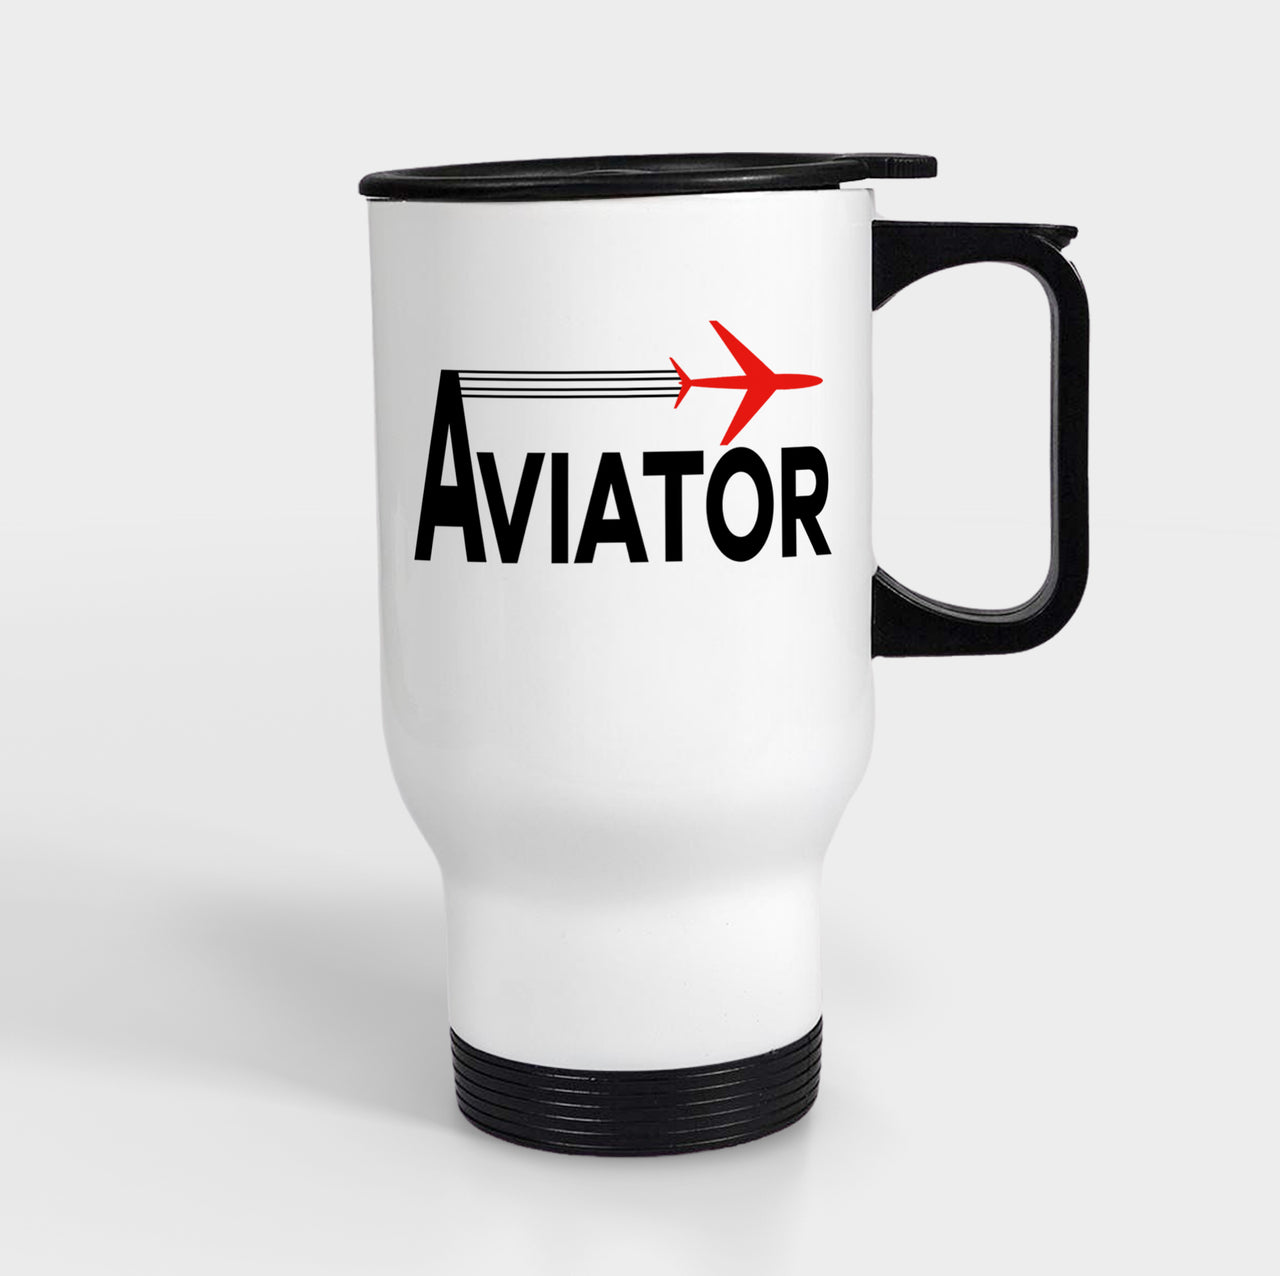 Aviator Designed Travel Mugs (With Holder)